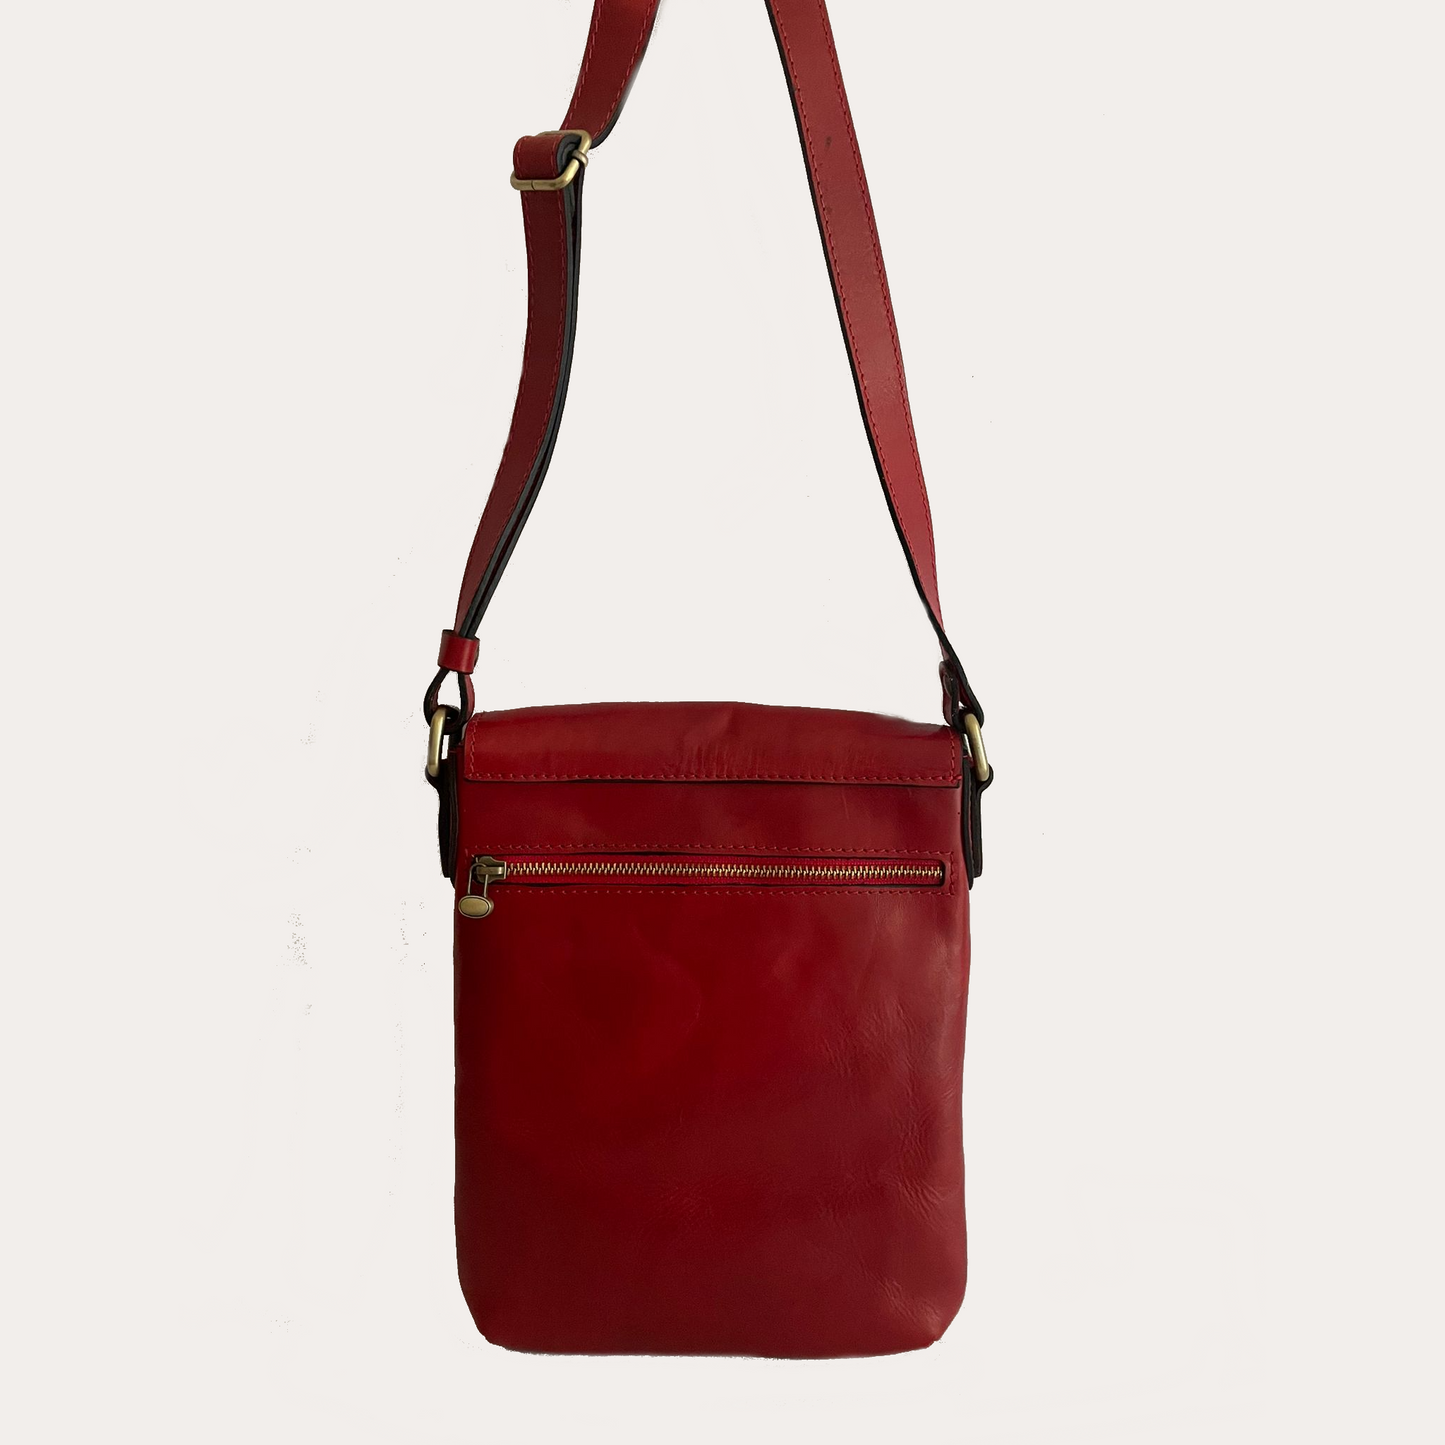 Ladies Red Leather Crossbody Bag